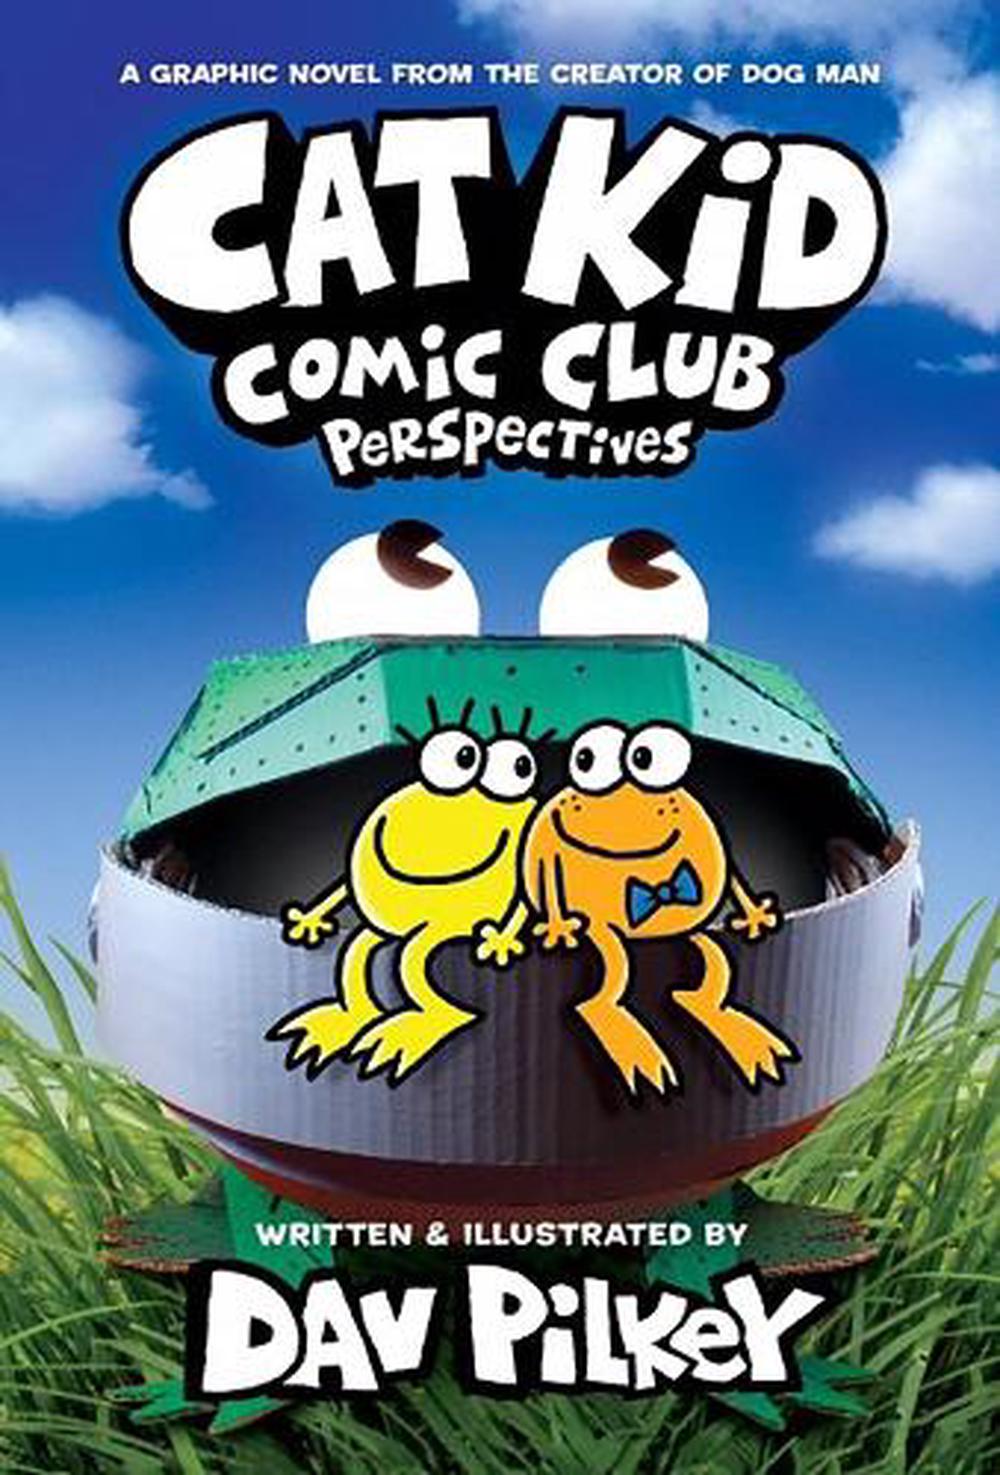 Cat Kid Comic Club #3: On Purpose by Dav Pilkey